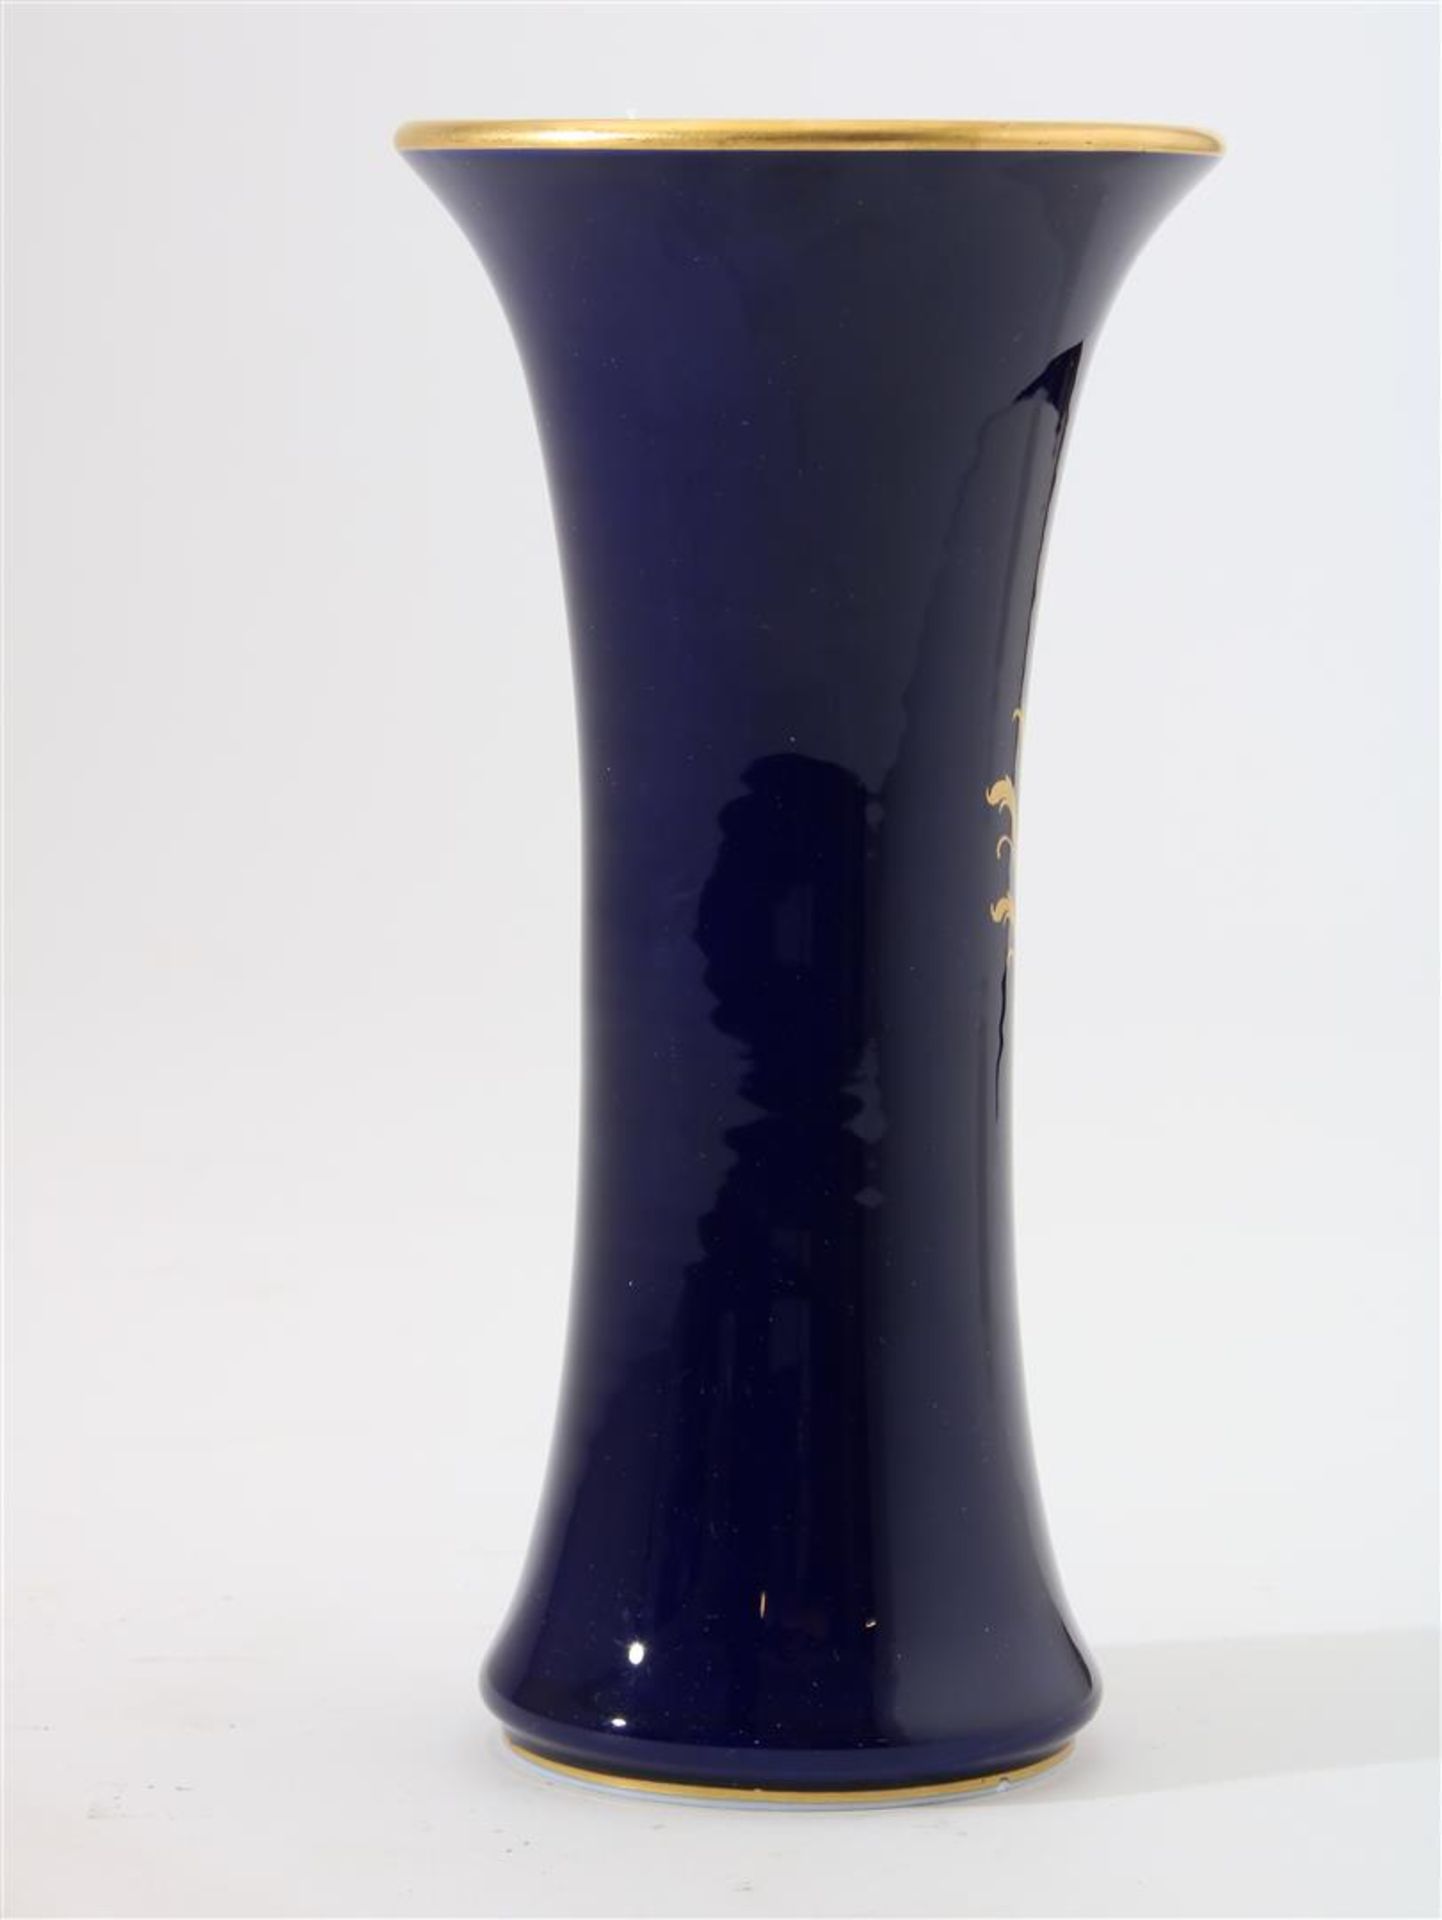 Cylindrical porcelain vase with flower decoration in gold rimmed oval on cobalt blue background, - Image 2 of 4